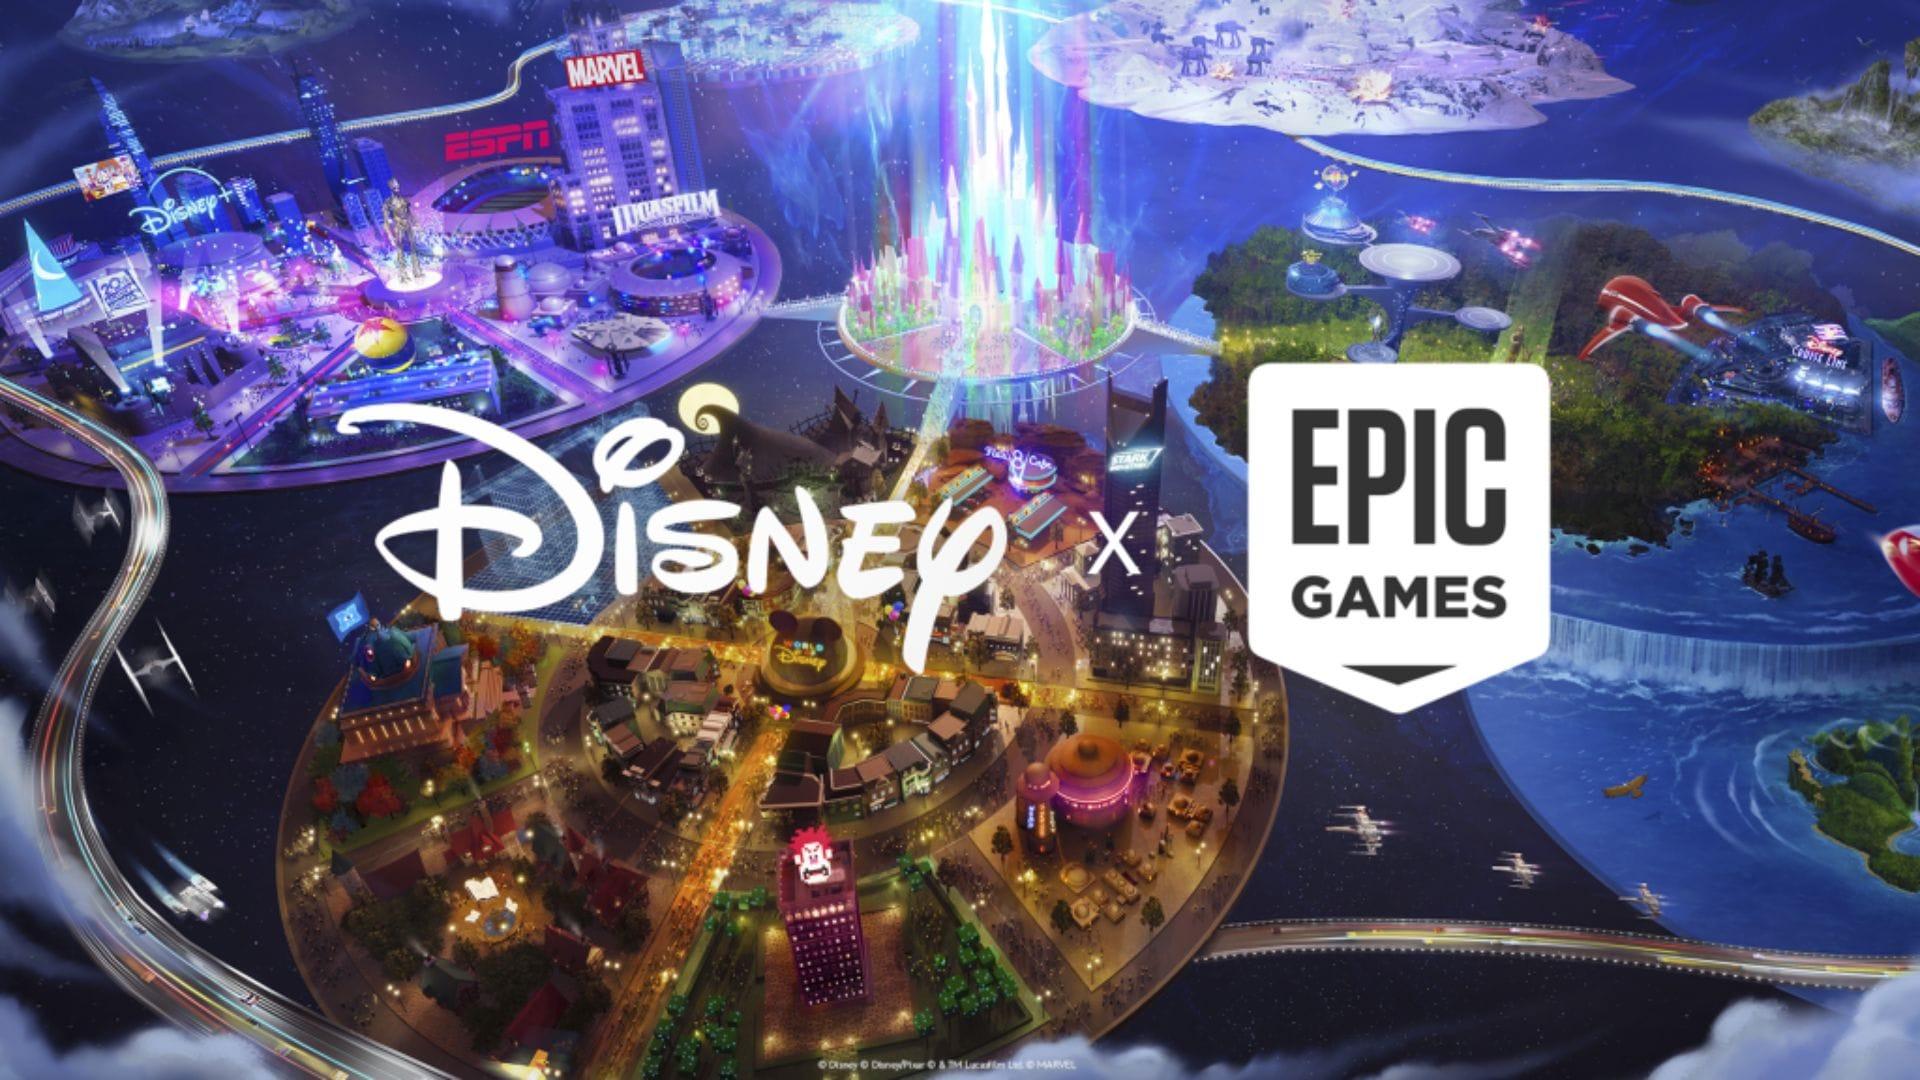 Disney ได้ประกาศว่ากำลังเข้าซื้อหุ้น Epic Games มูลค่ามากถึง 1,500 ล้านเหรียญ